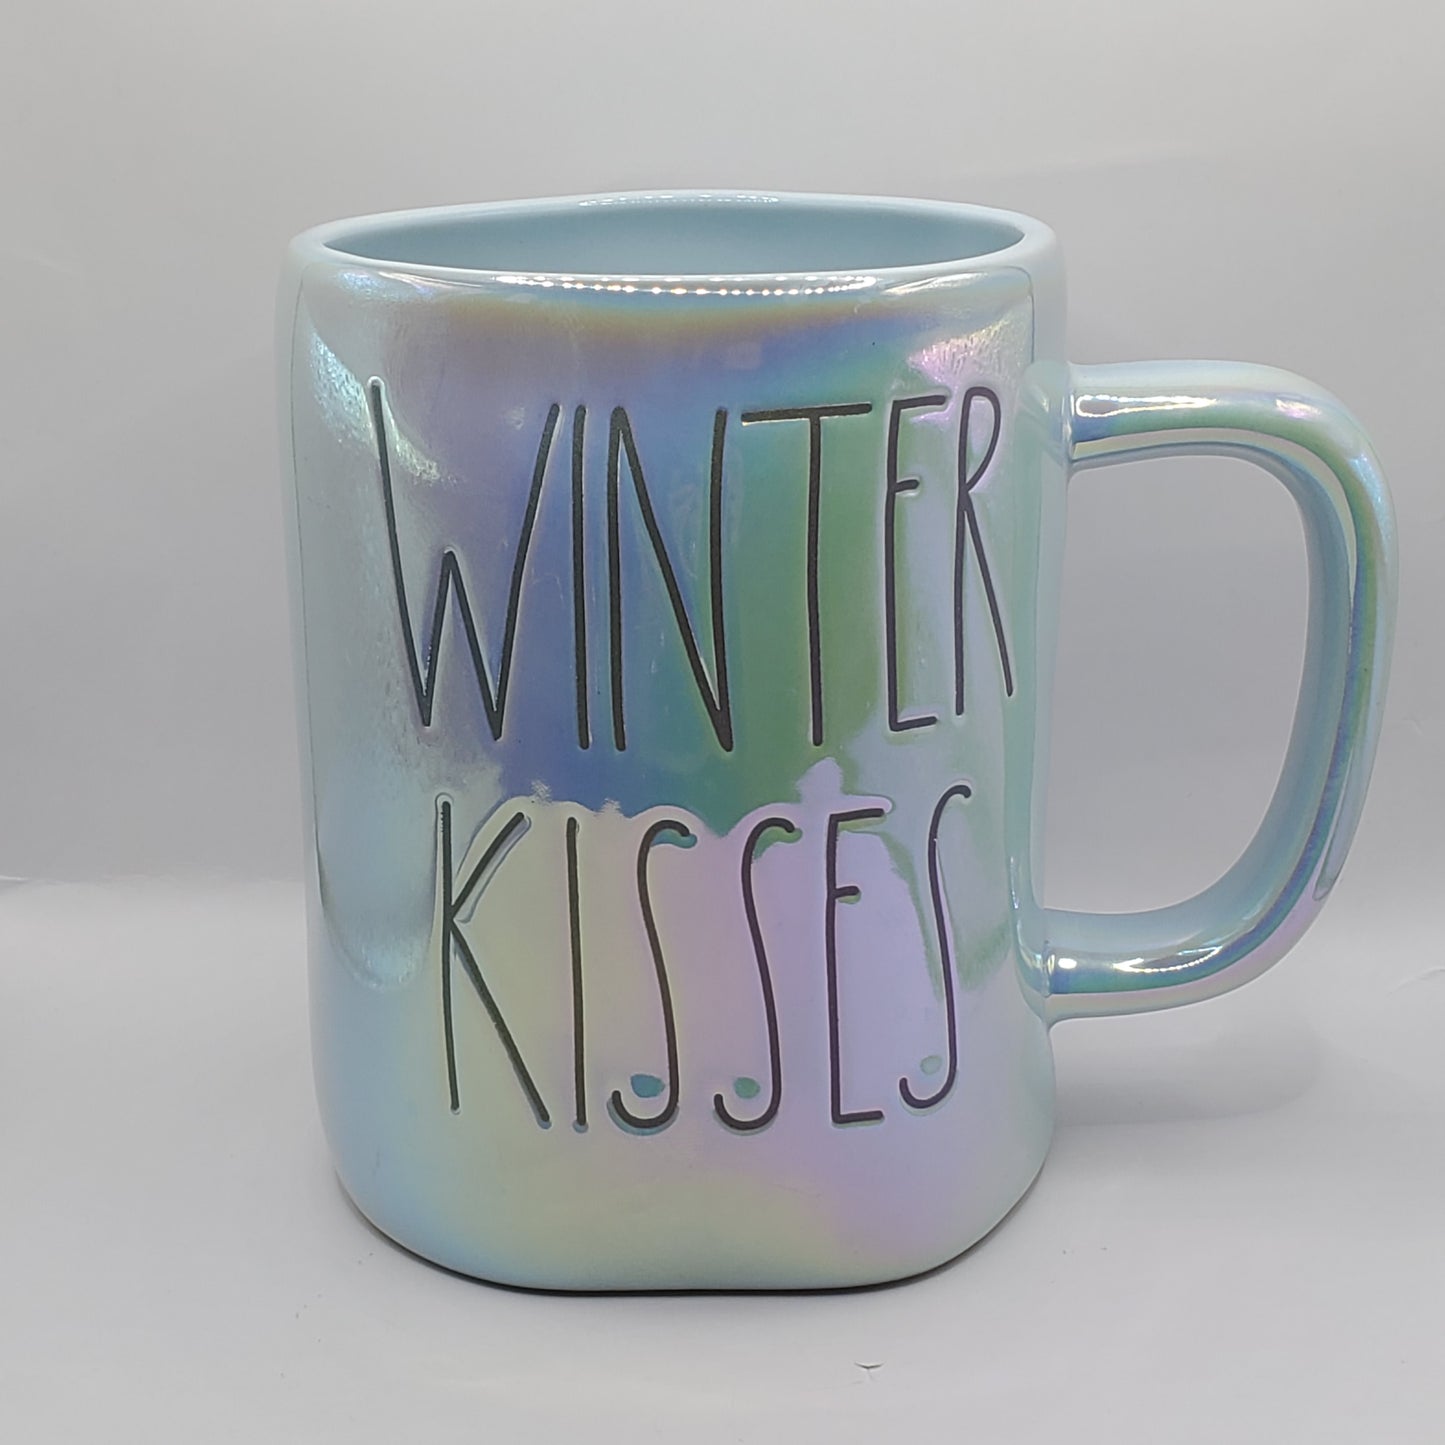 Winter Kisses Mug